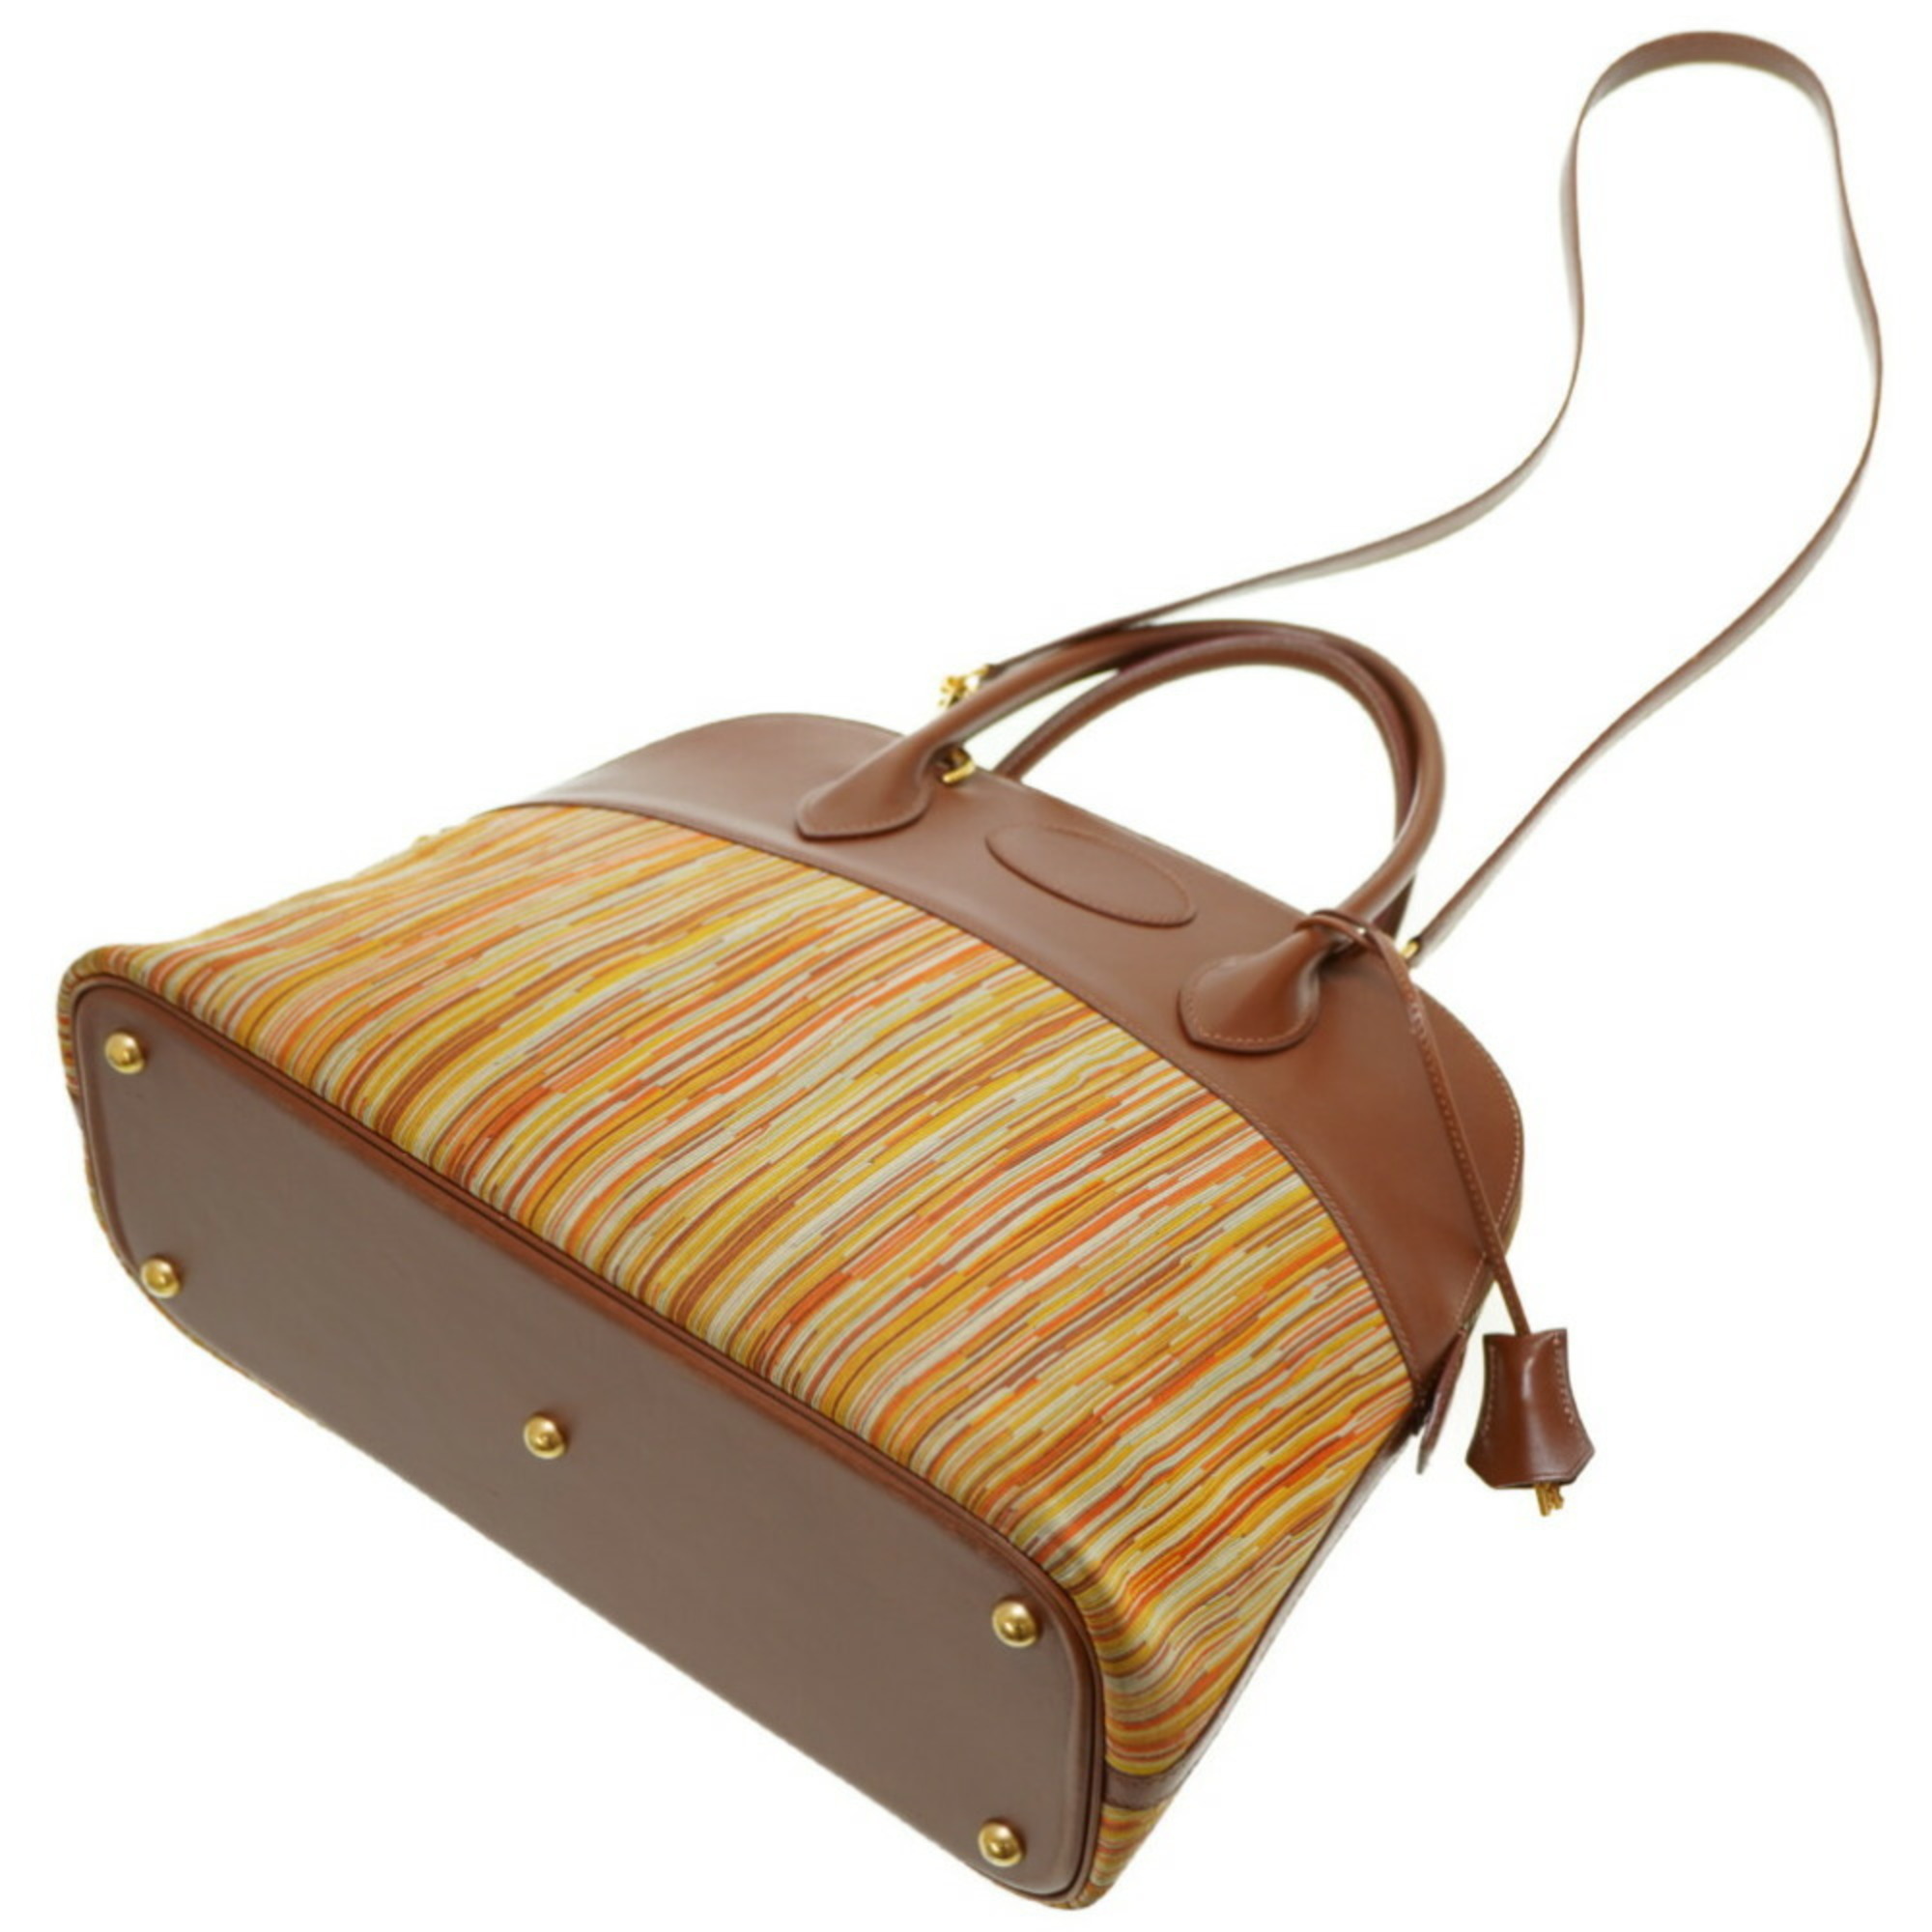 Hermes Bolide 35 Boxcalf Vibrato Noazette □F stamped handbag with strap